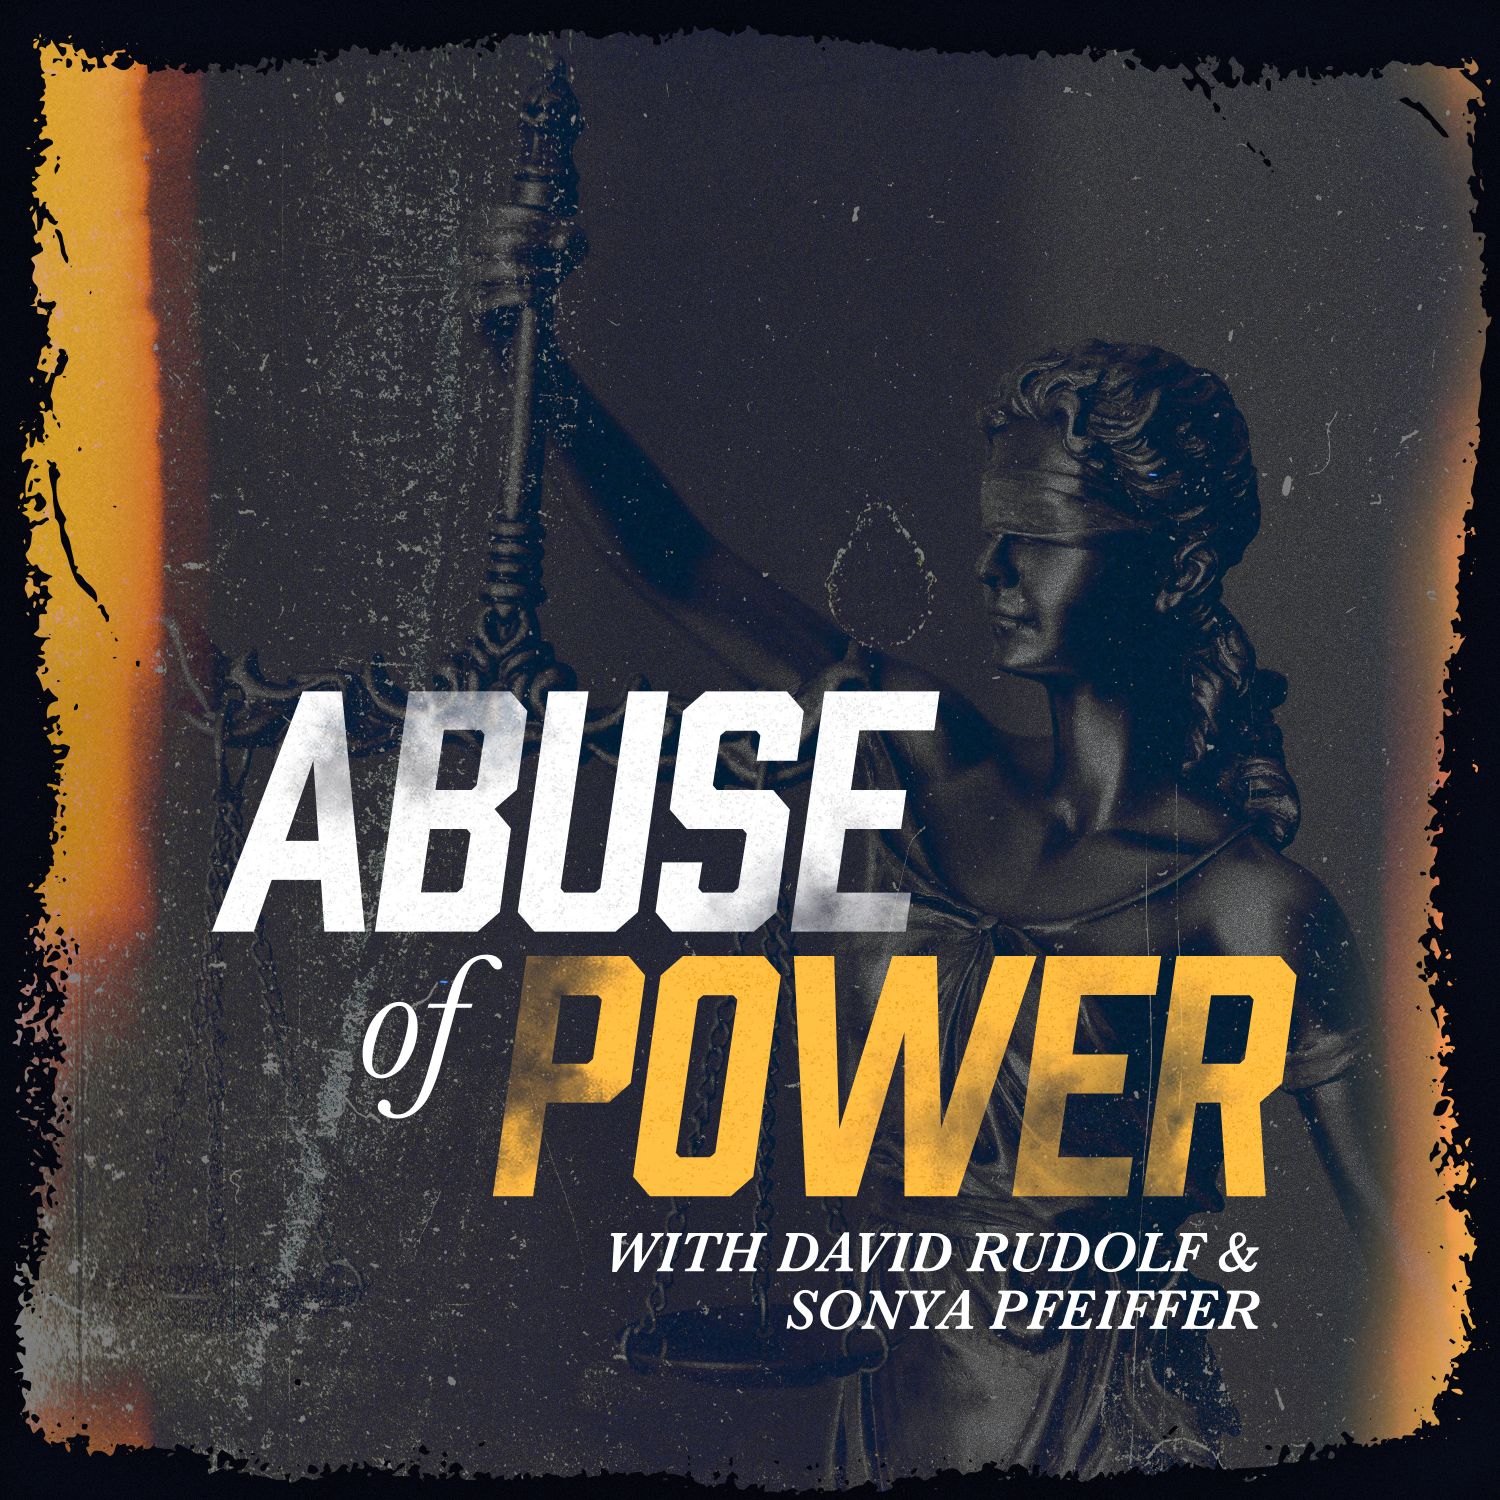 Abuse of Power with David Rudolf and Sonya Pfeiffer